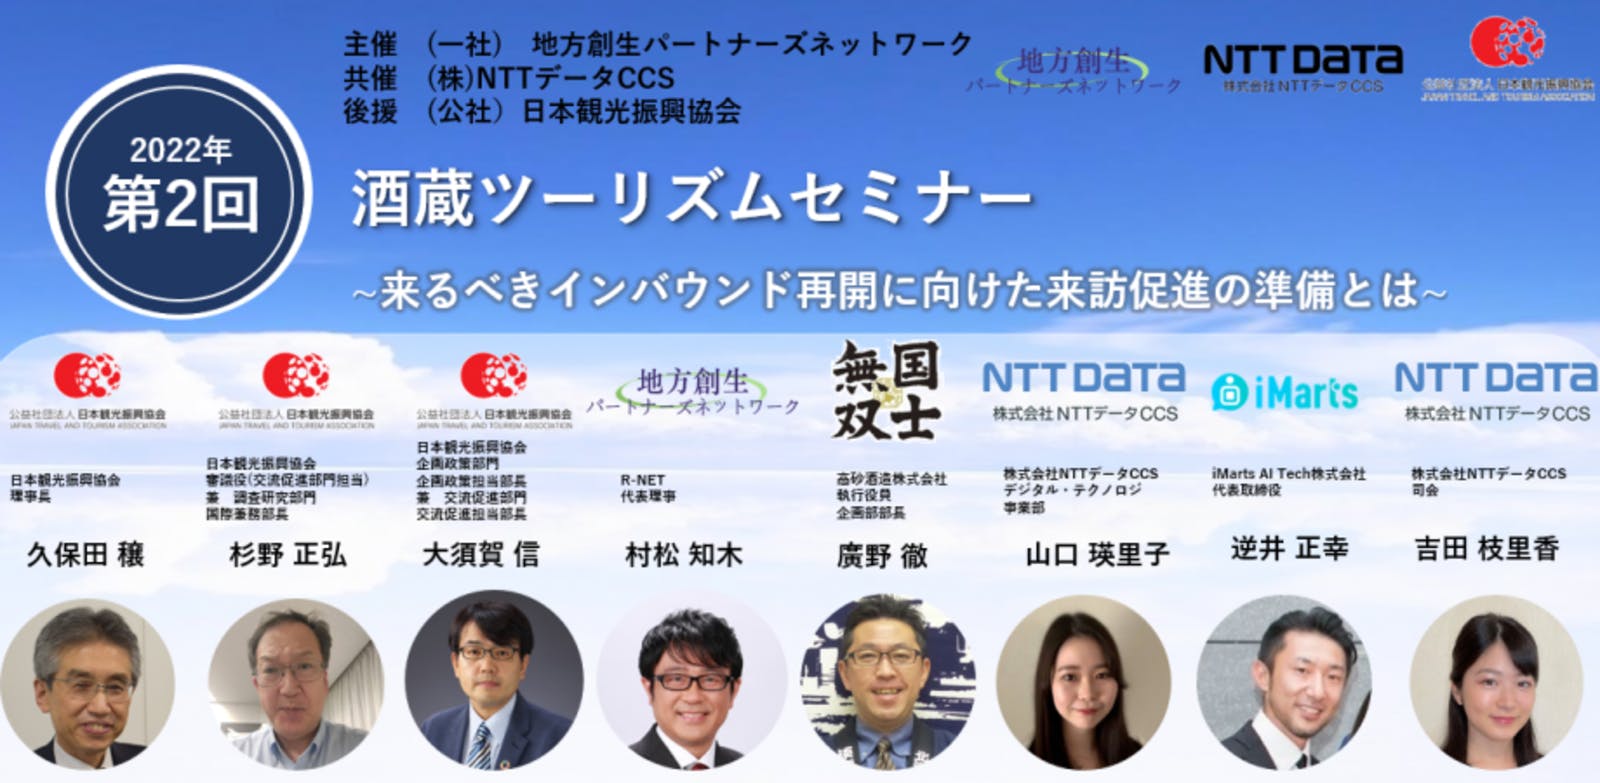 R-NET主催、NTTデータCCS共催「酒蔵ツーリズムセミナー」